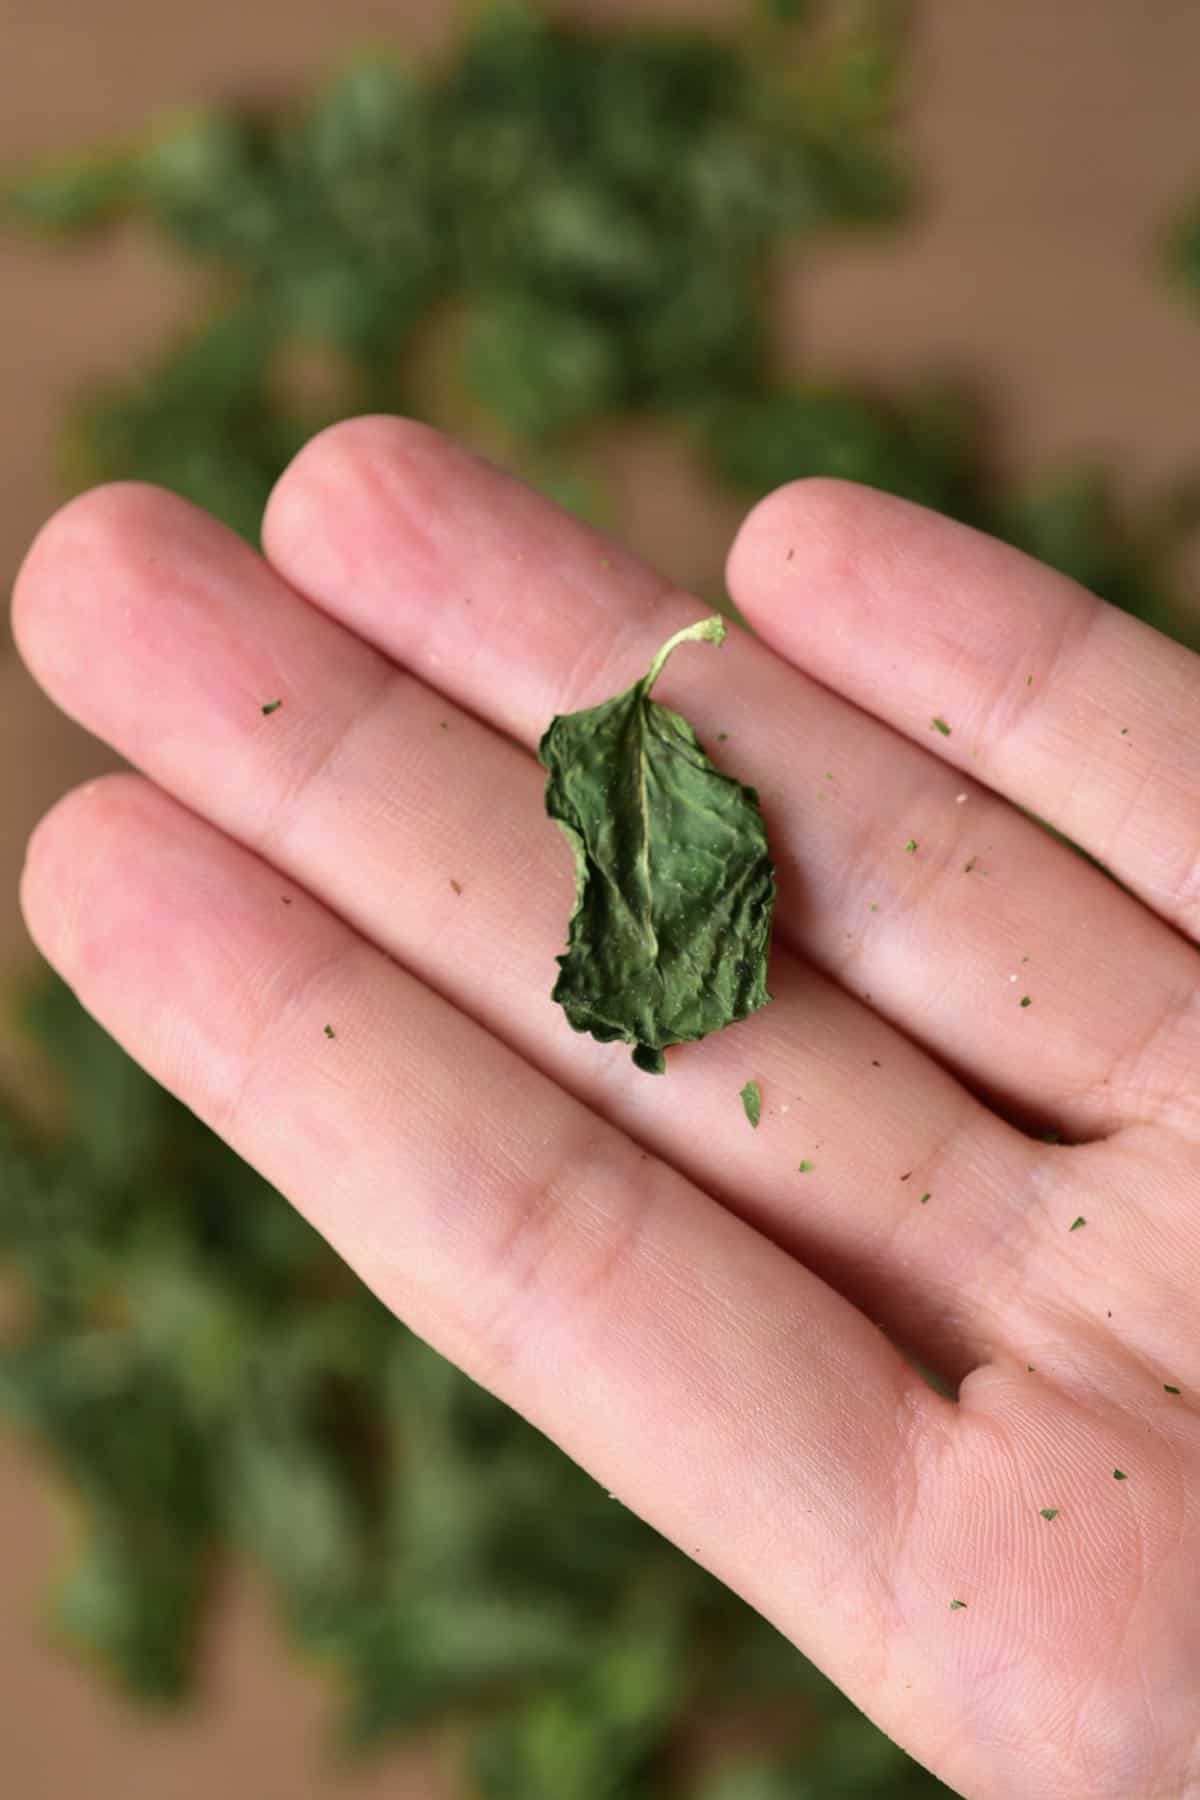 A hand holding a dried mint leaf